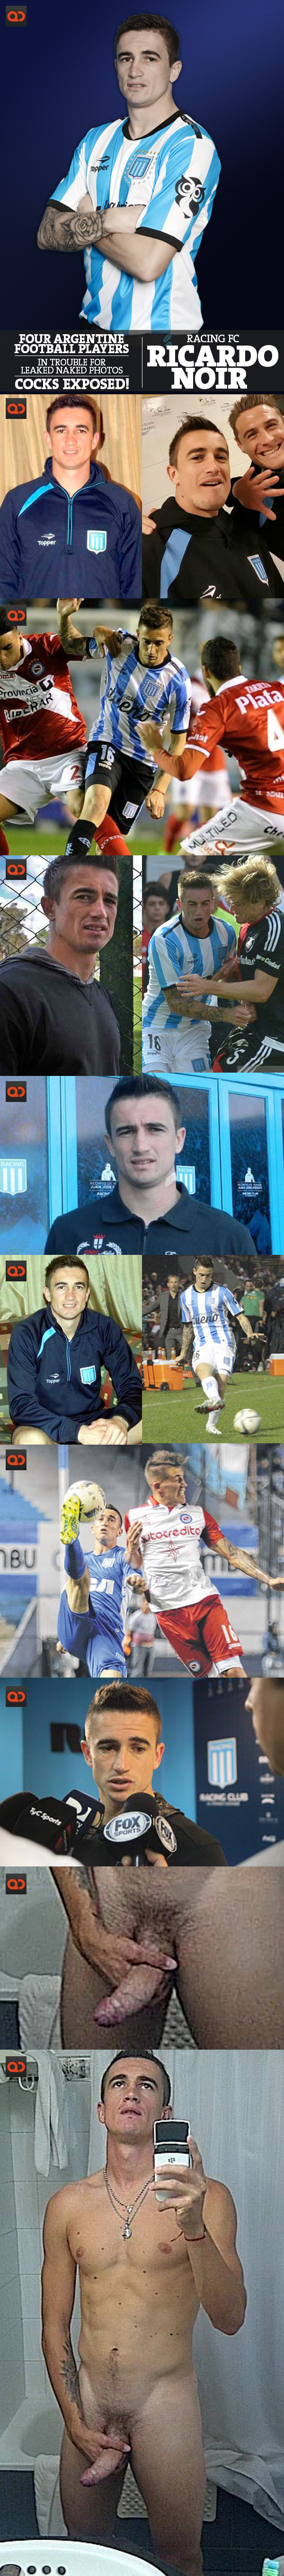 qc-exposed_celebs_argentine_football_players_daniel_osvaldo-sebastian_palacios_ricardo_noir_fabian_noguera_cocks_exposed-collage01